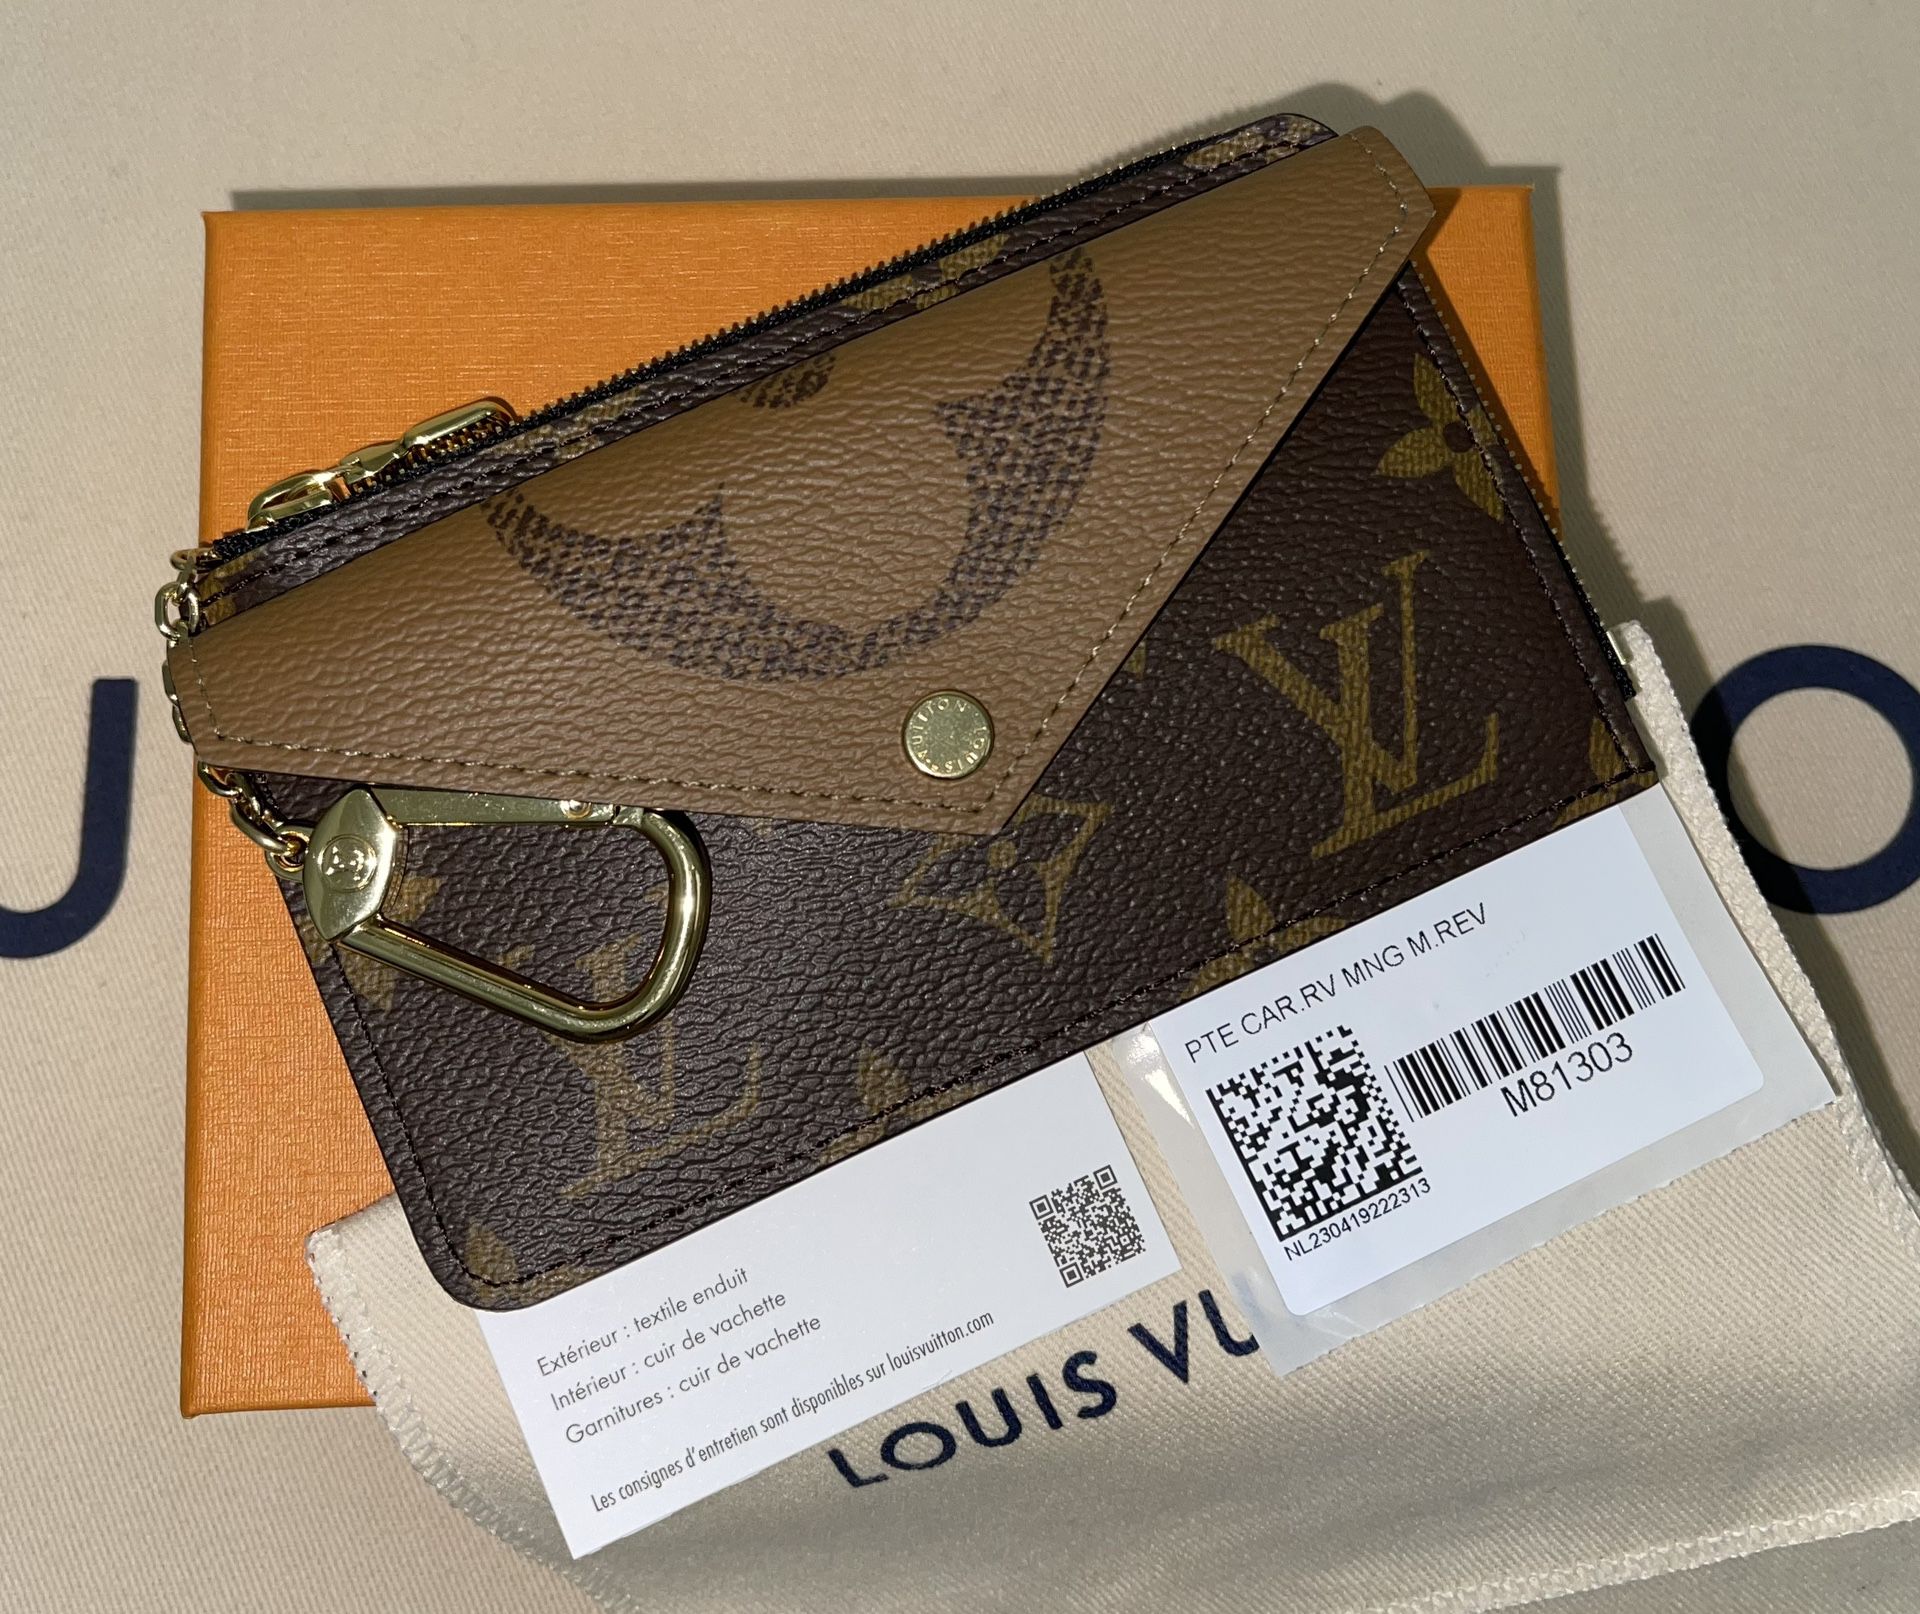 Authentic Louis Vuitton Rain Boots for Sale in Frisco, TX - OfferUp